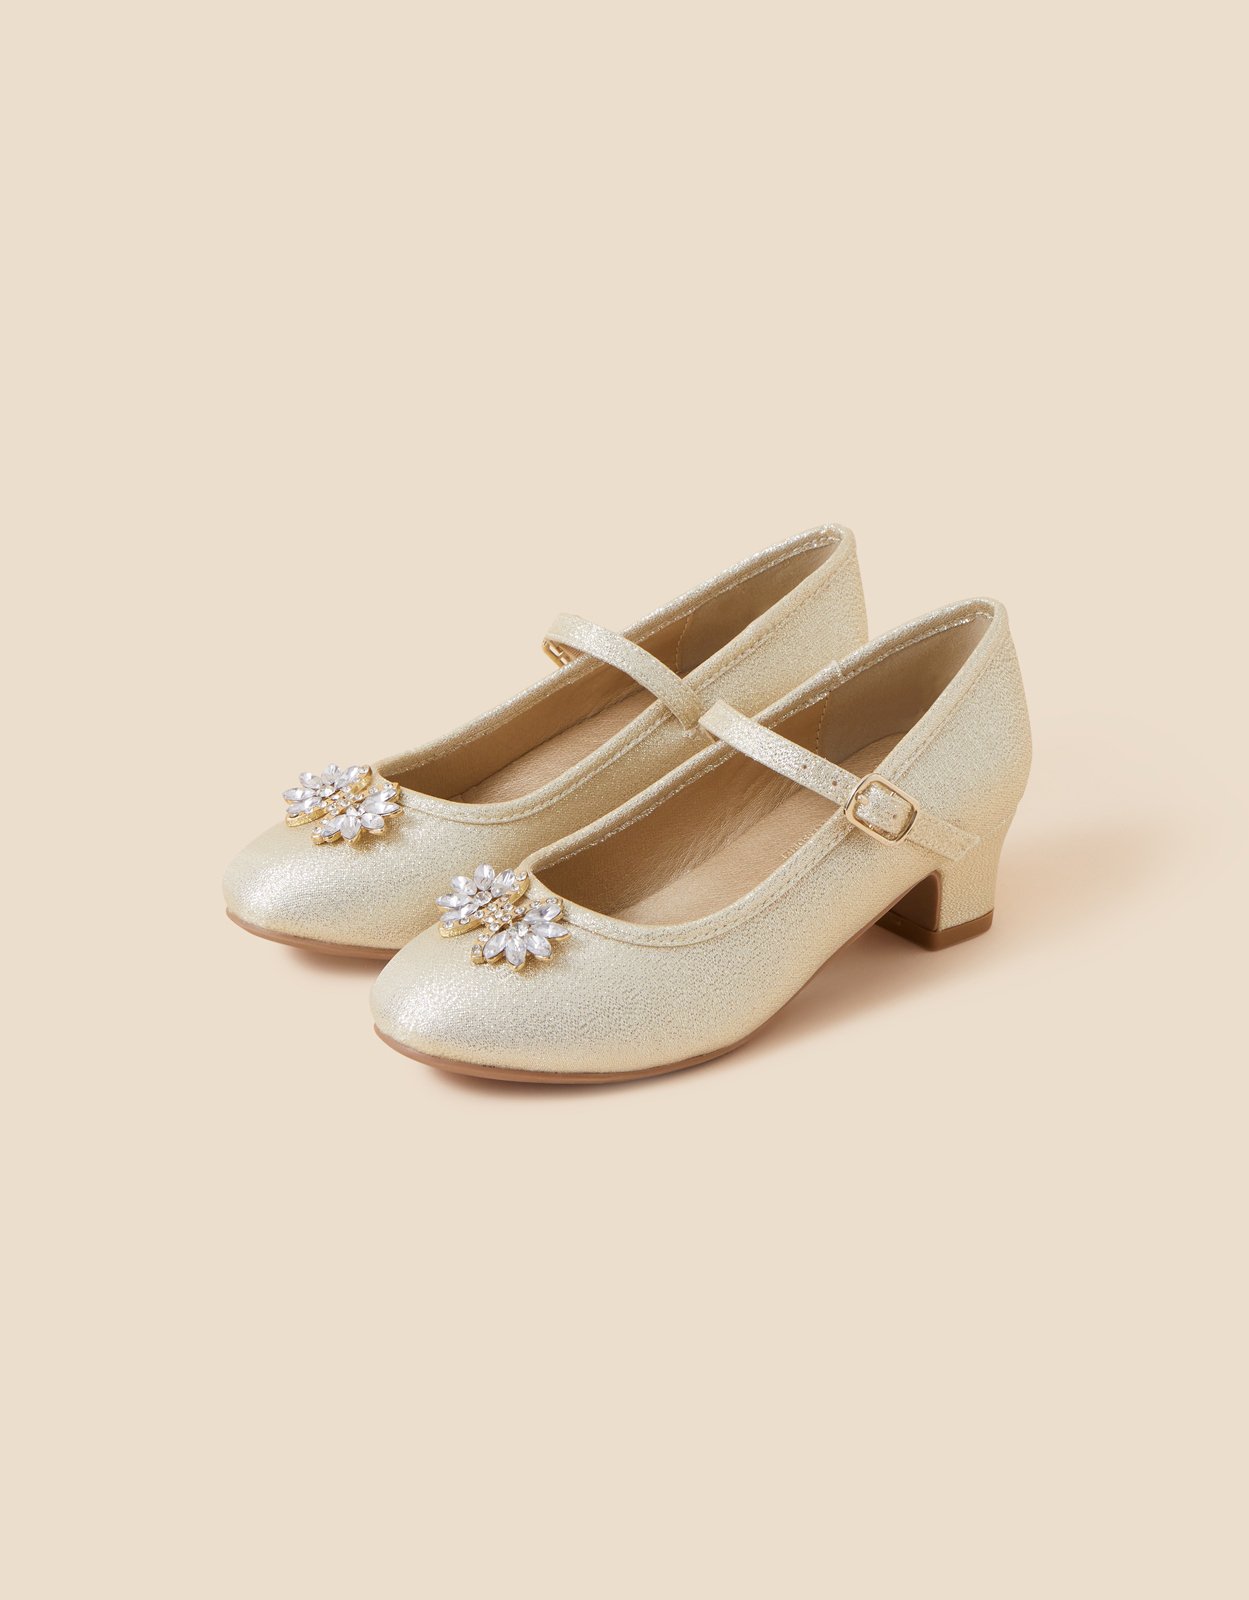 Accessorize Girl's Girls Shimmer Gem Flamenco Shoes Gold, Size: 11